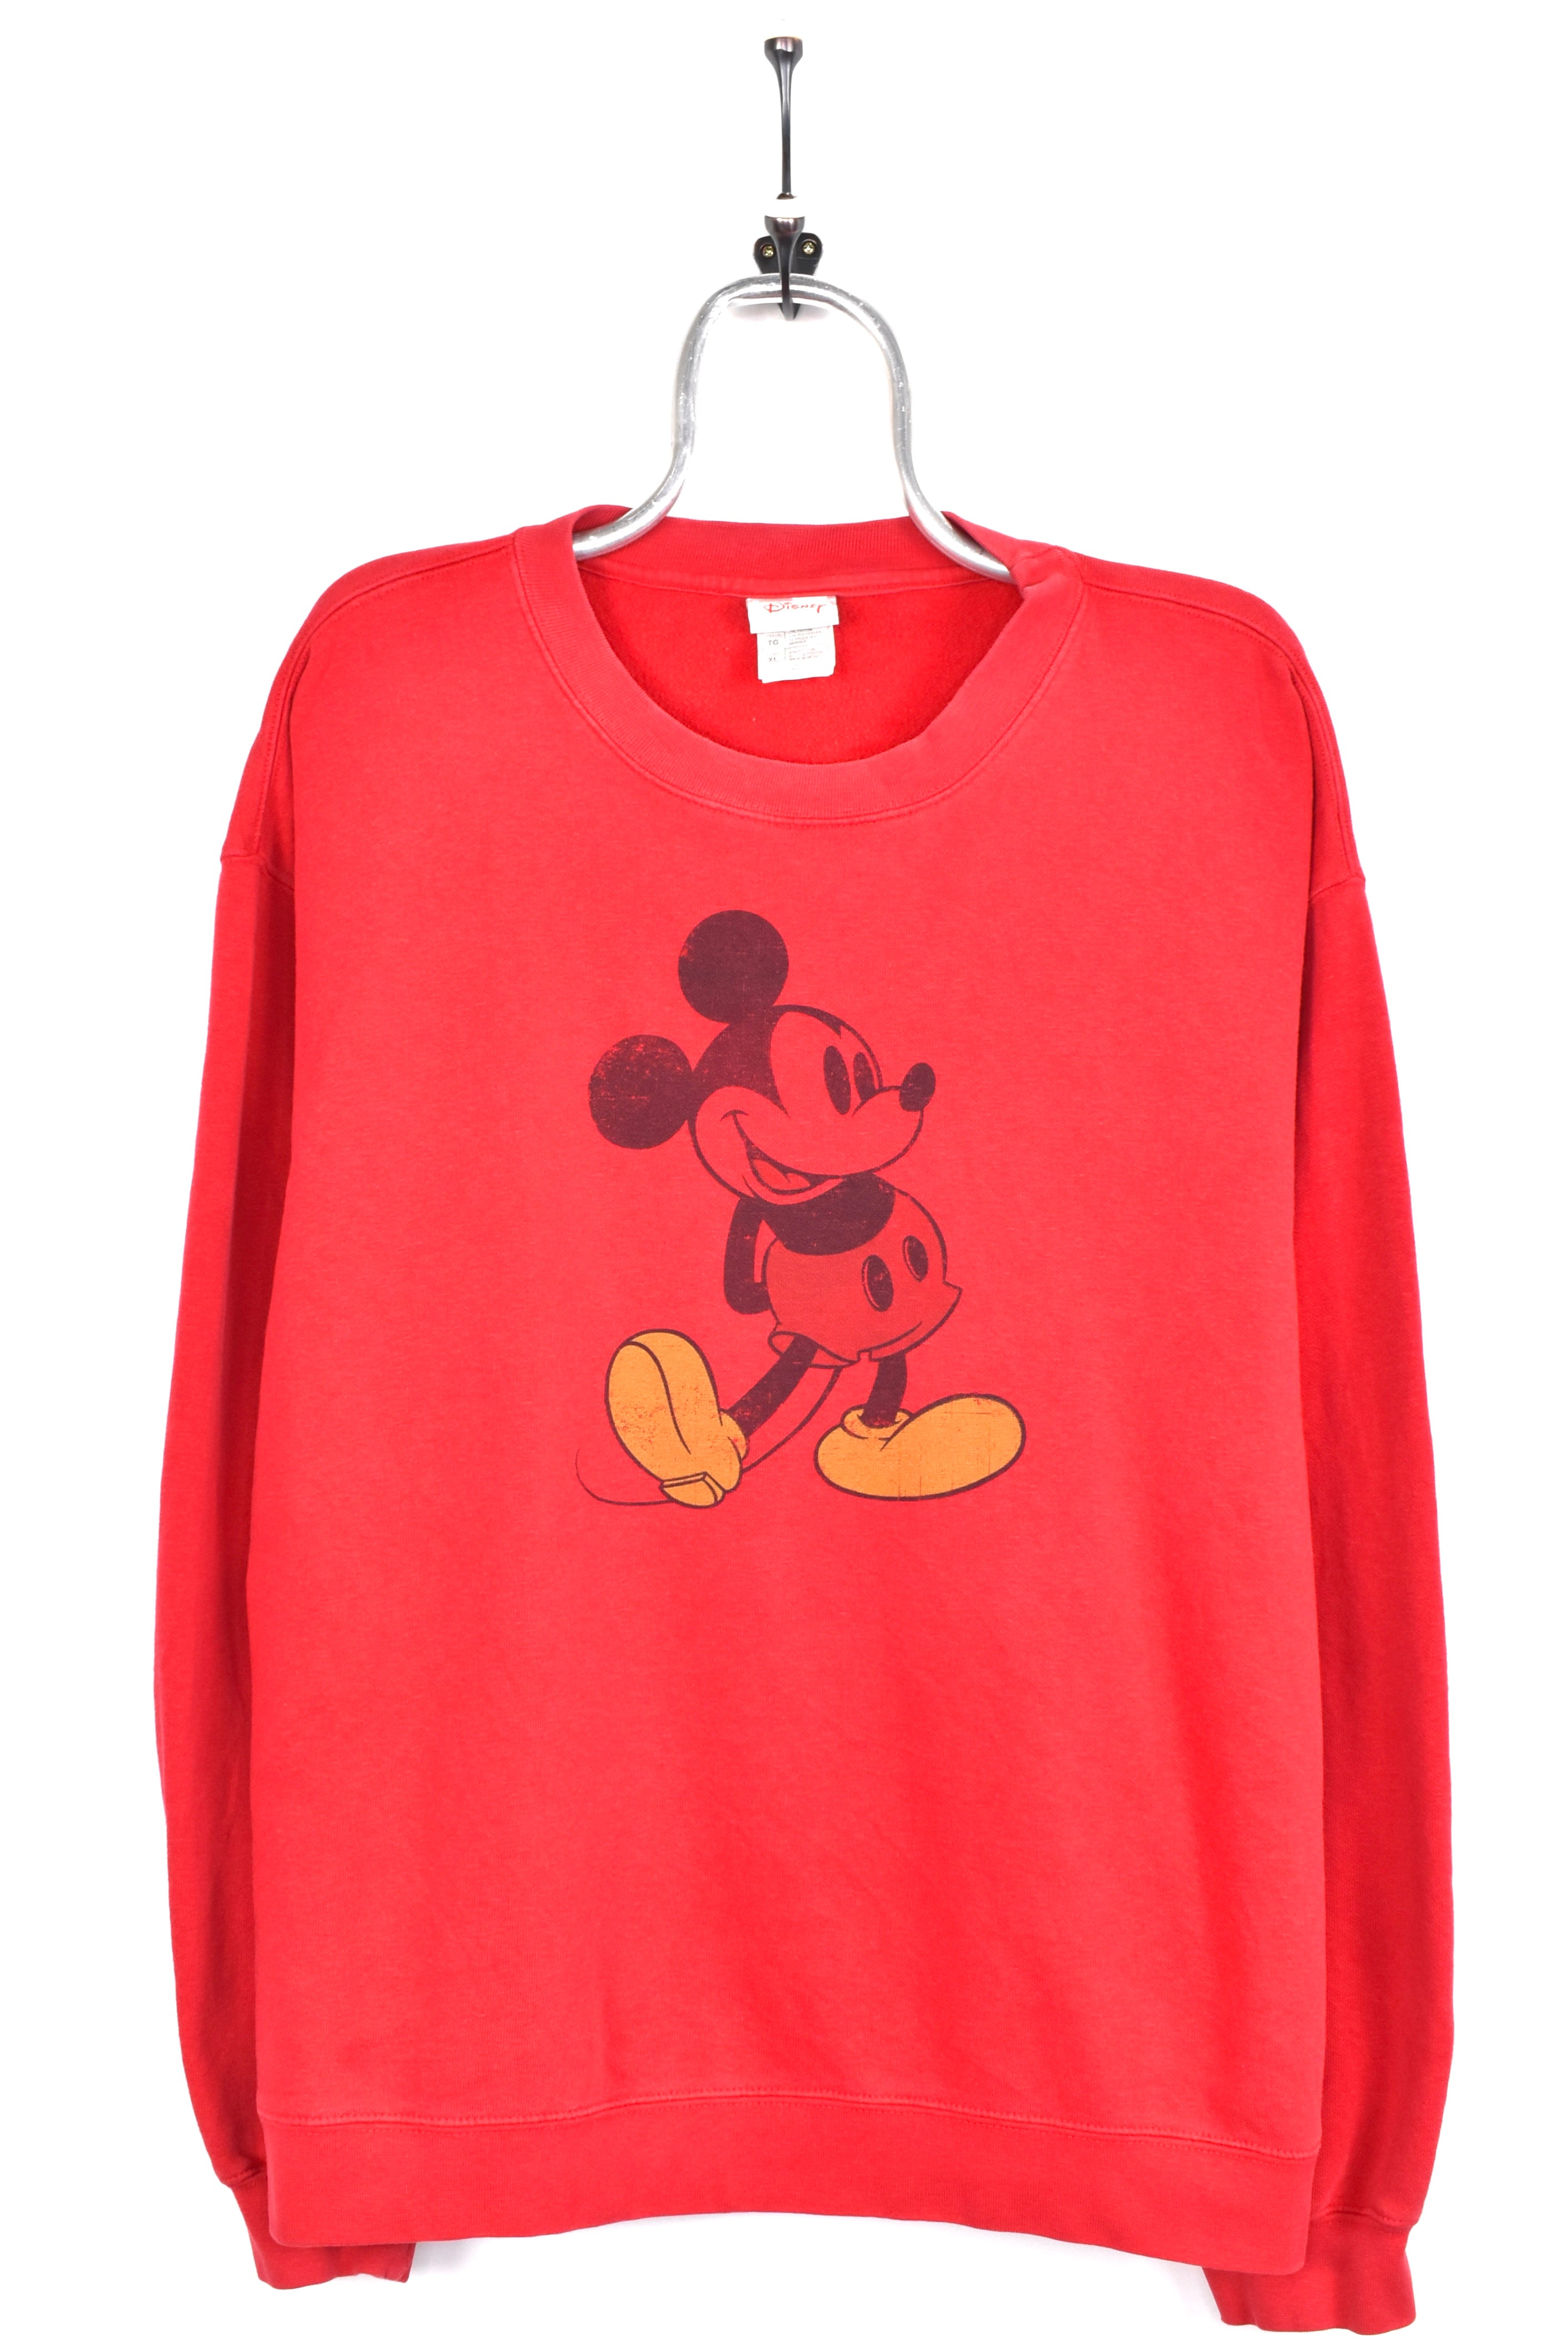 Vintage Mickey Mouse sweatshirt, Disney red graphic crewneck - AU XXL DISNEY / CARTOON